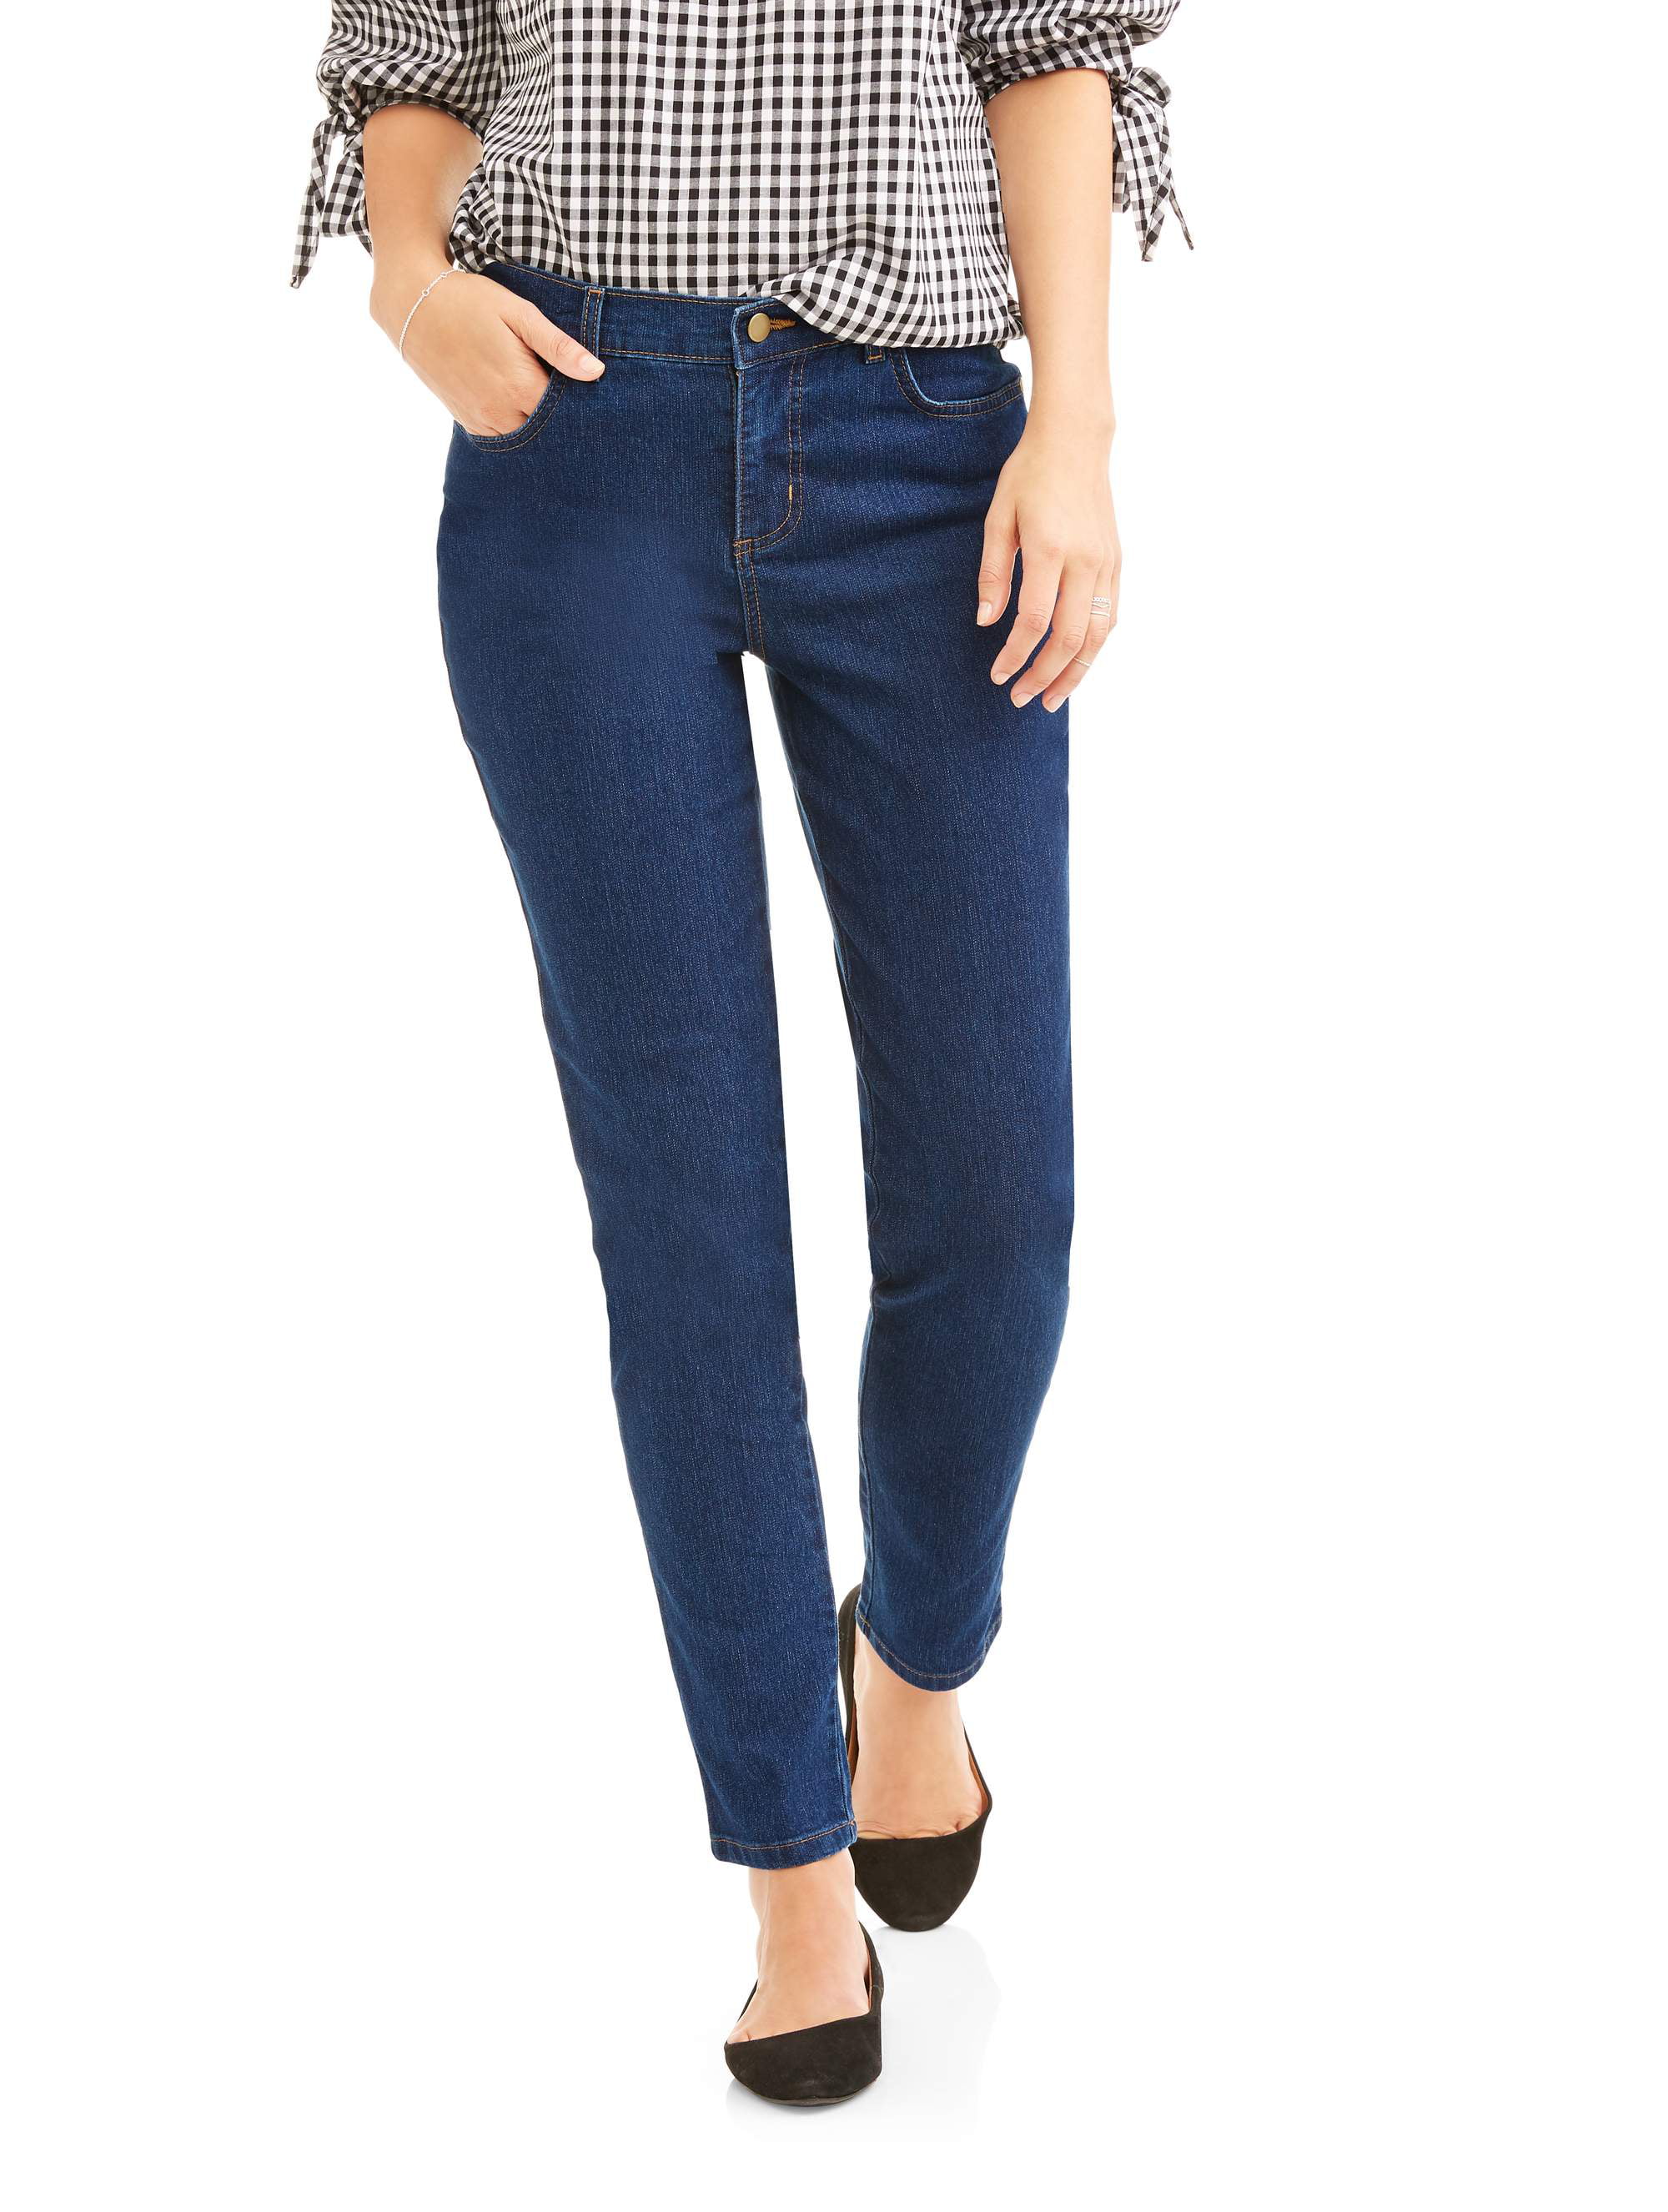 RealSize - Women's Stretch Denim 5-Pocket Jeans with Back Elastic ...